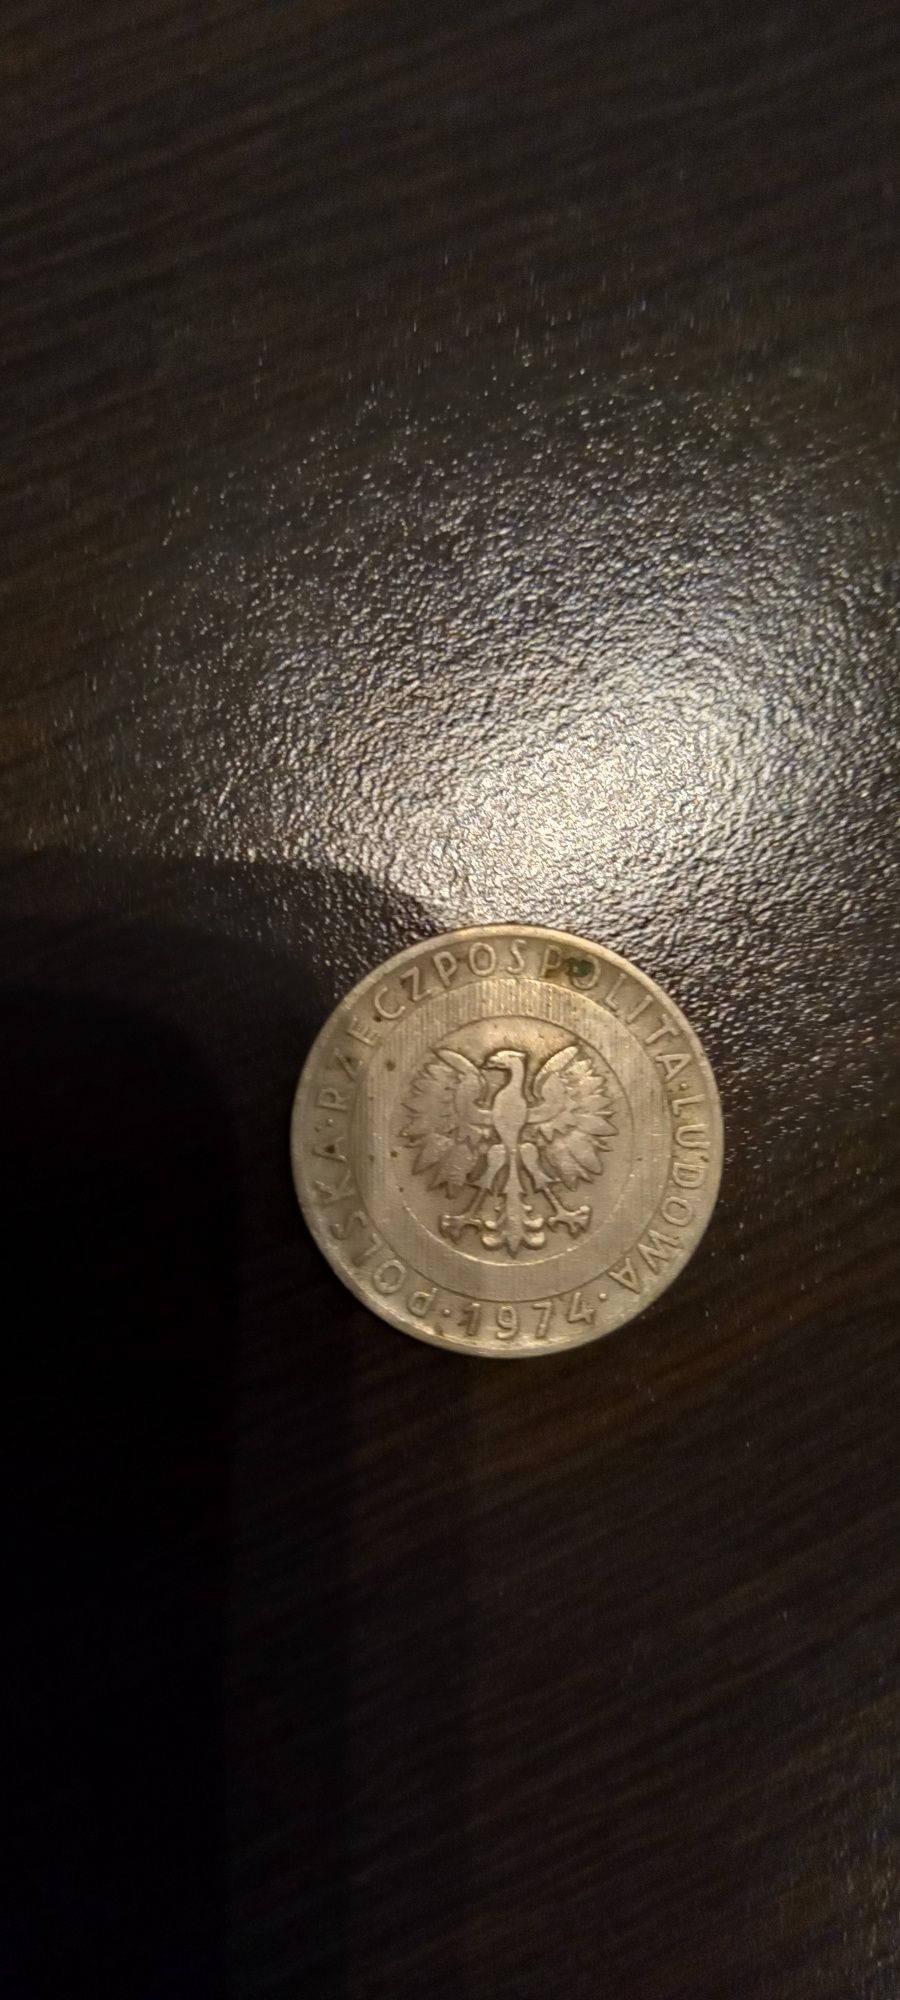 Moneta 20 zł z 1974 roku bez znaku mennicy